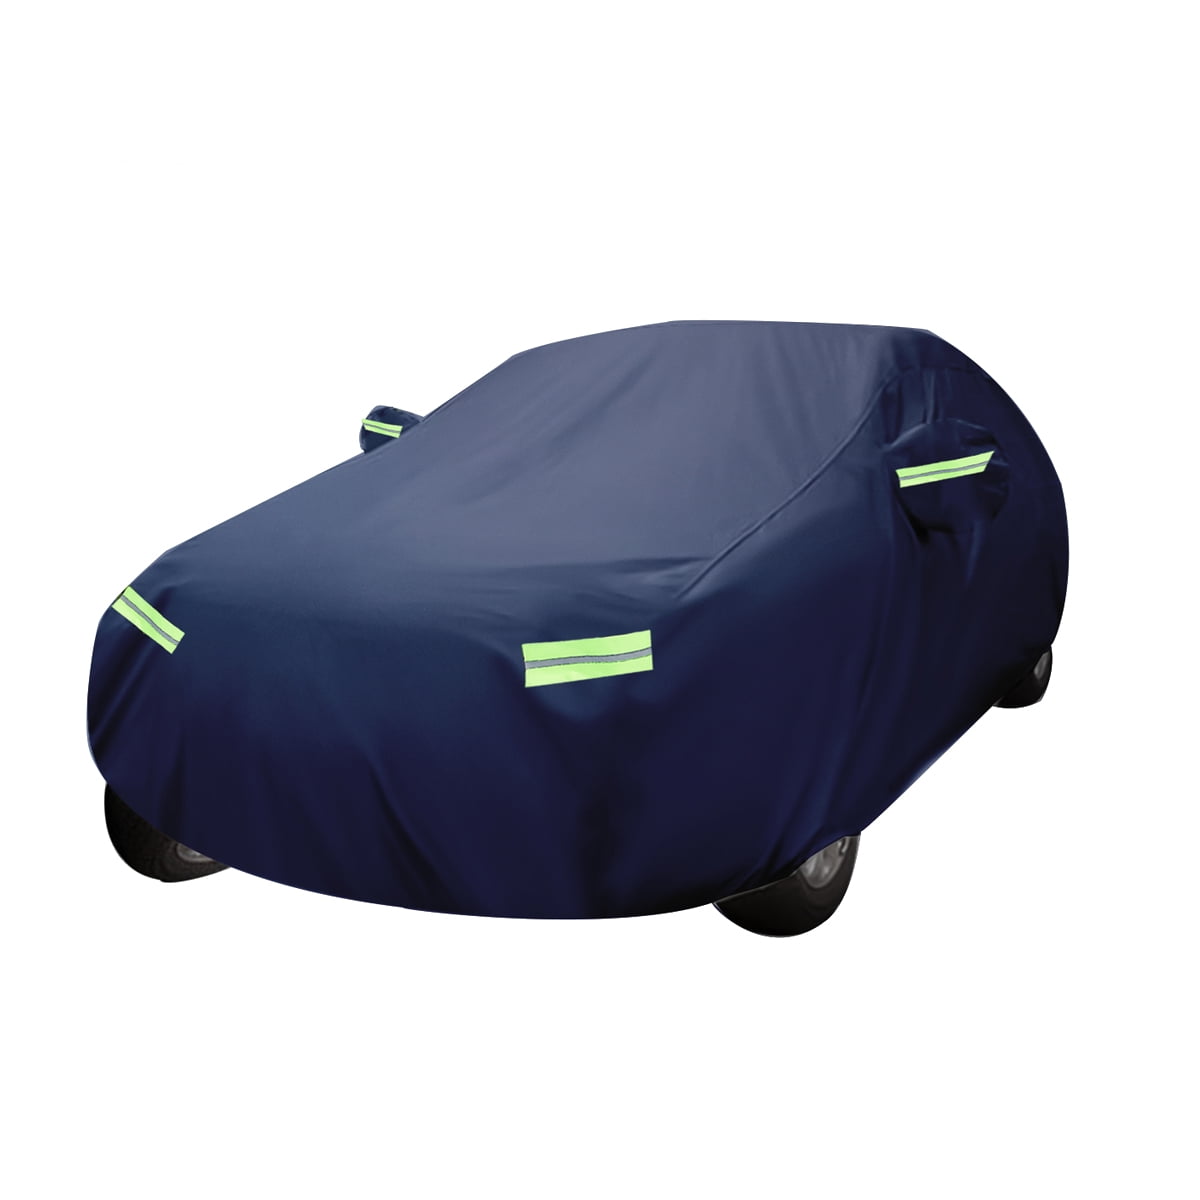 Full Car Cover Waterproof/Dustproof Full Car Cover for MG HS 2019